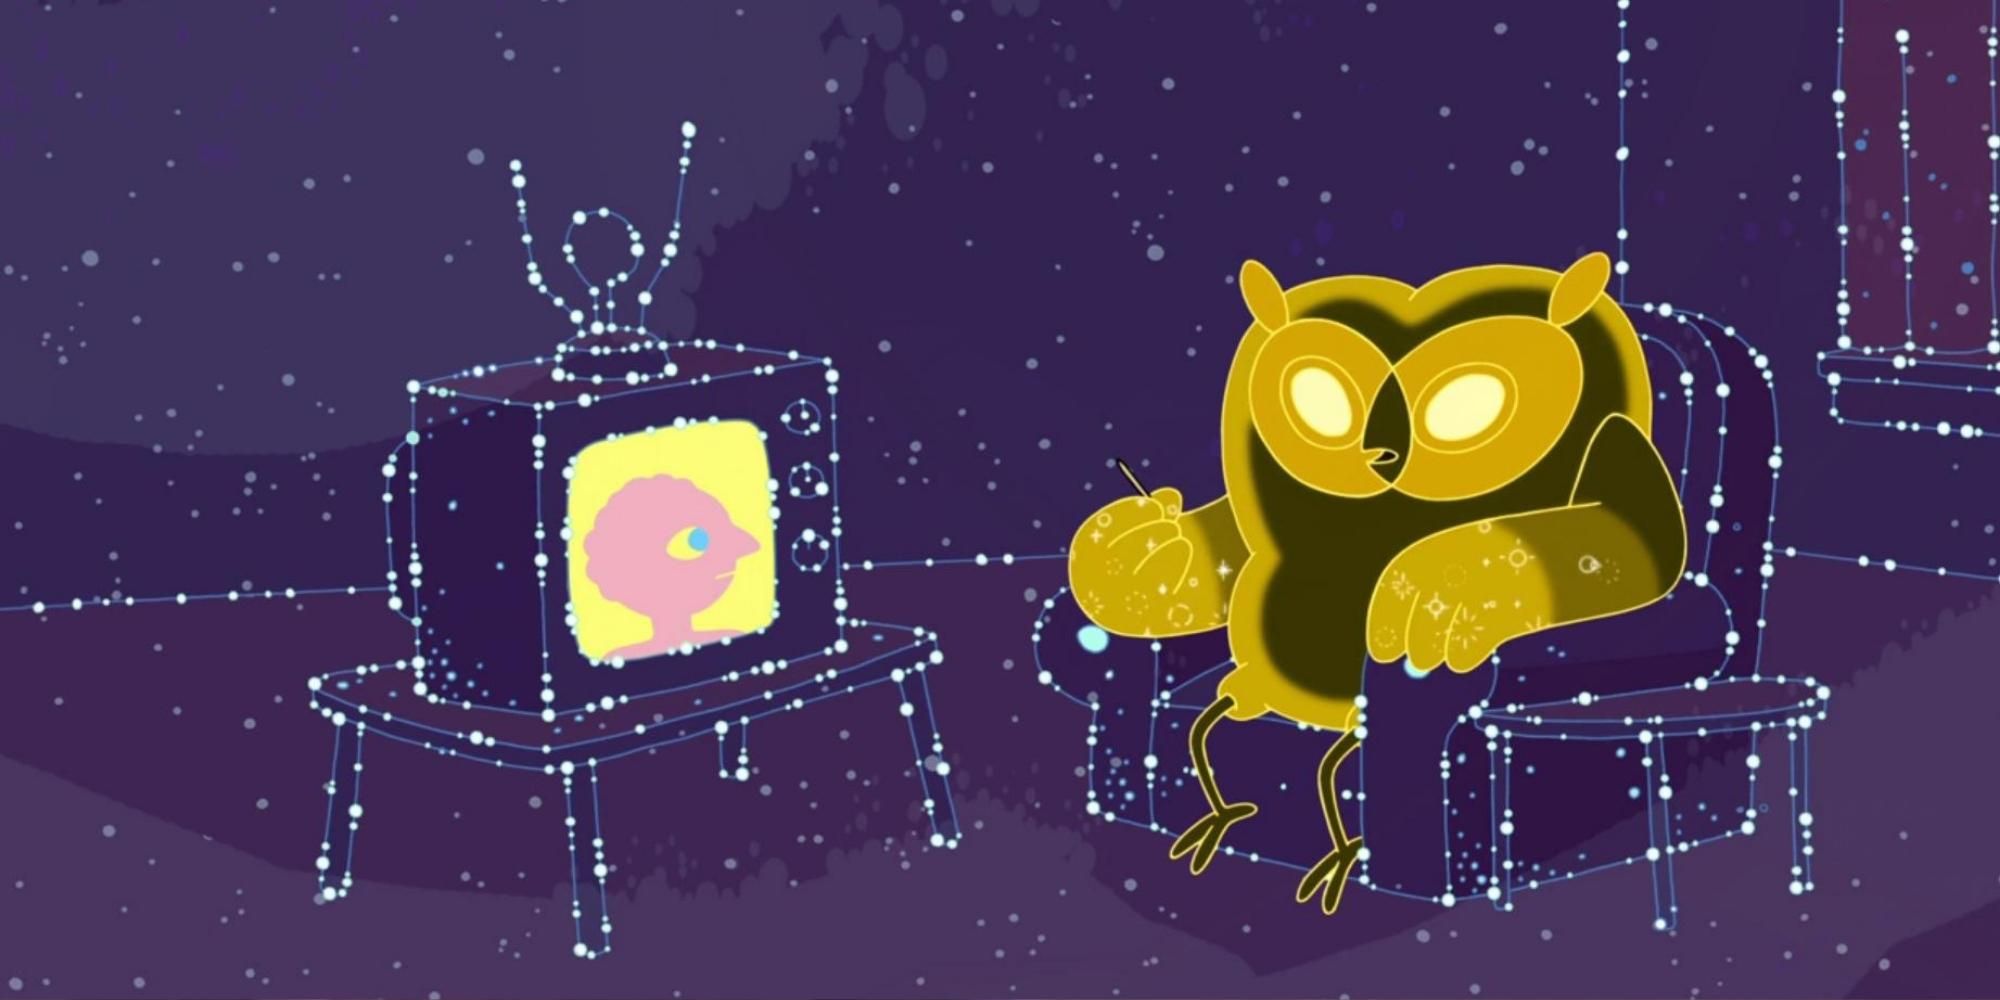 Cosmic Owl in Adventure Time